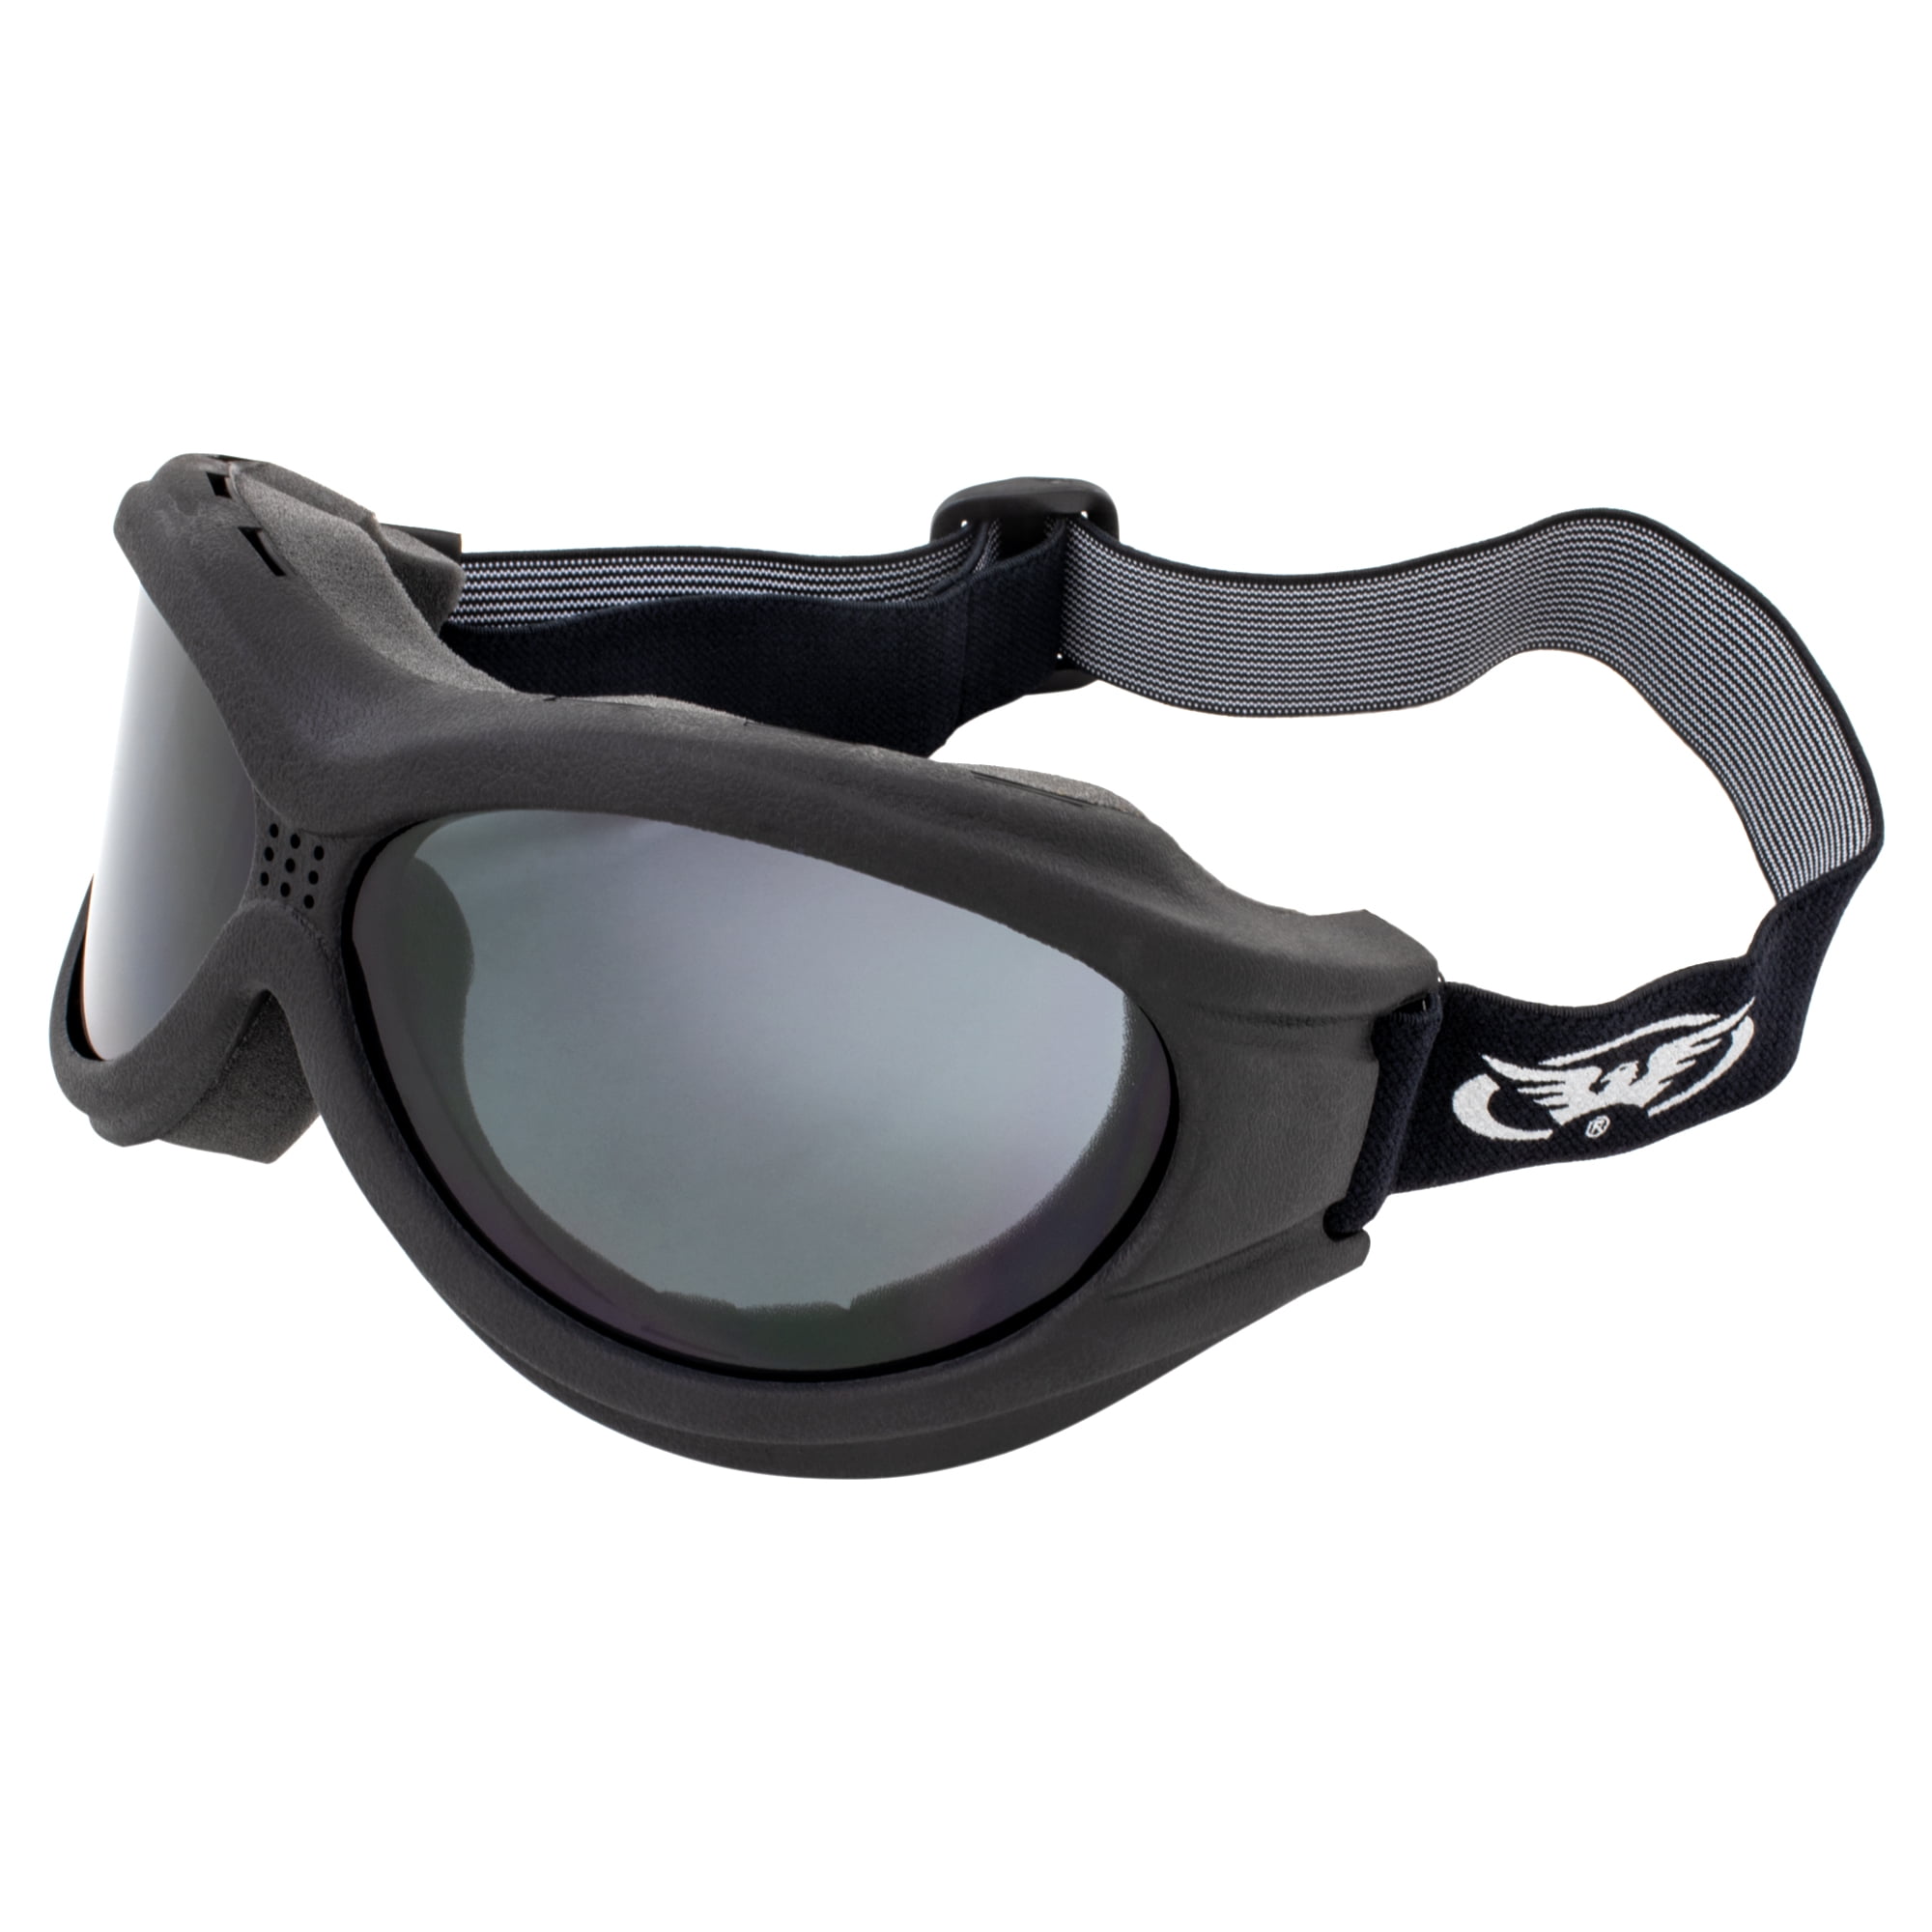 Flexible Anti-Fog Motorcycle Goggles Kit-2 LENSES-Fit Over Prescription Glasses 